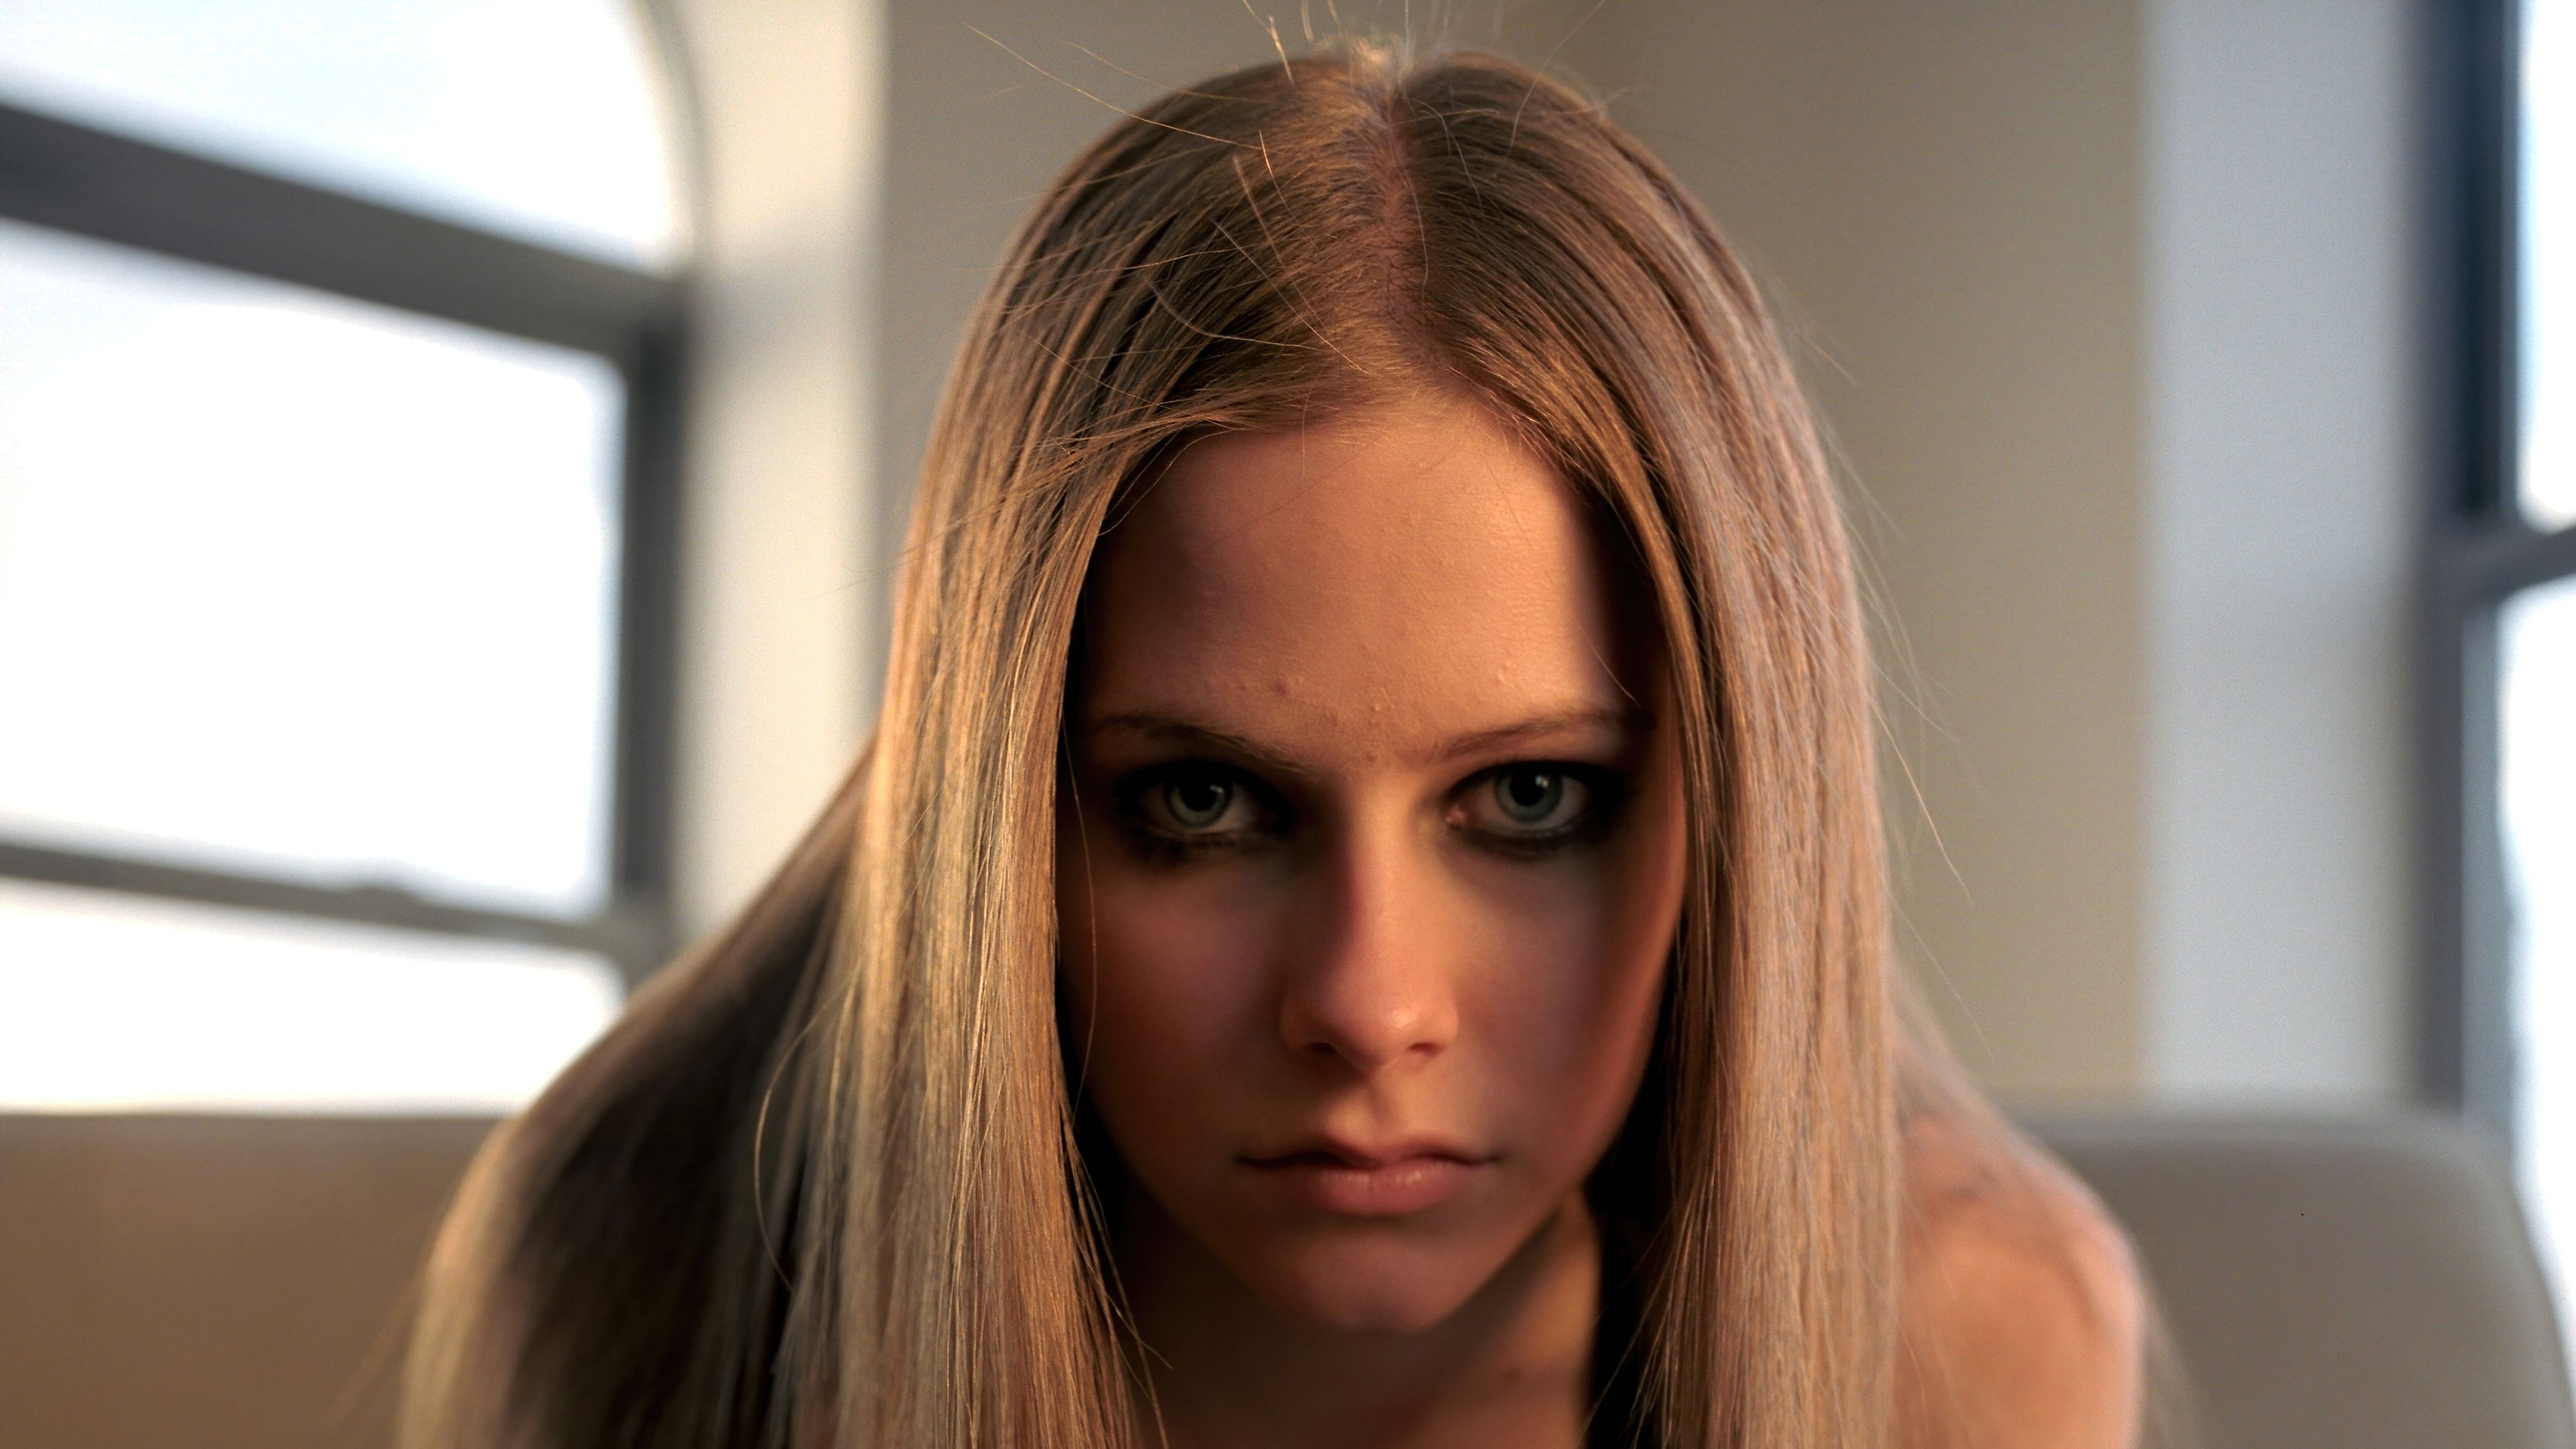  Avril Lavigne HQ Background Images